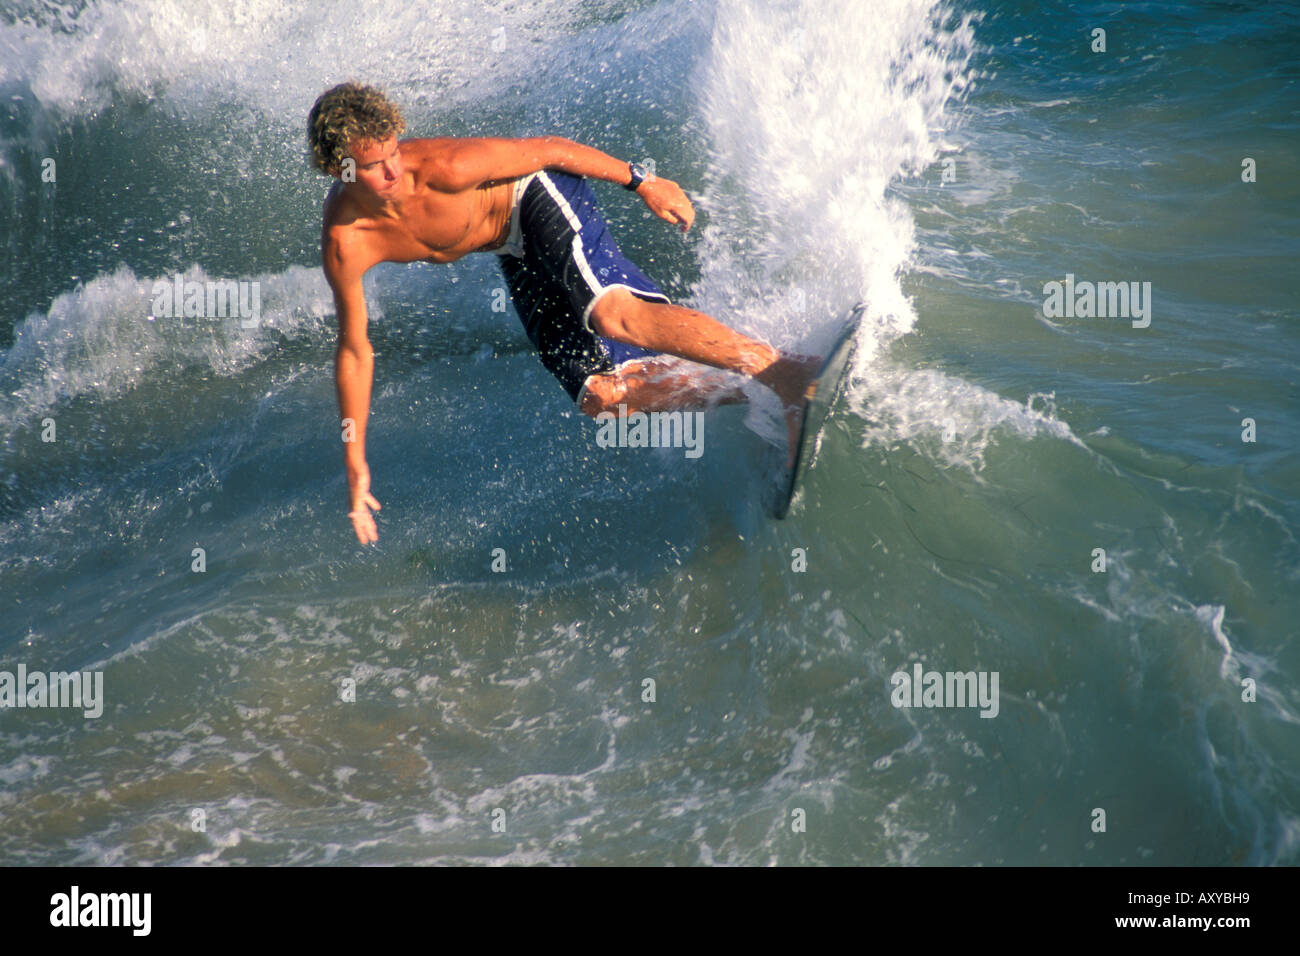 Surfer surfing on breaking wave using a skimboard near Balboa Pier Balboa Island Newport Beach California Stock Photo